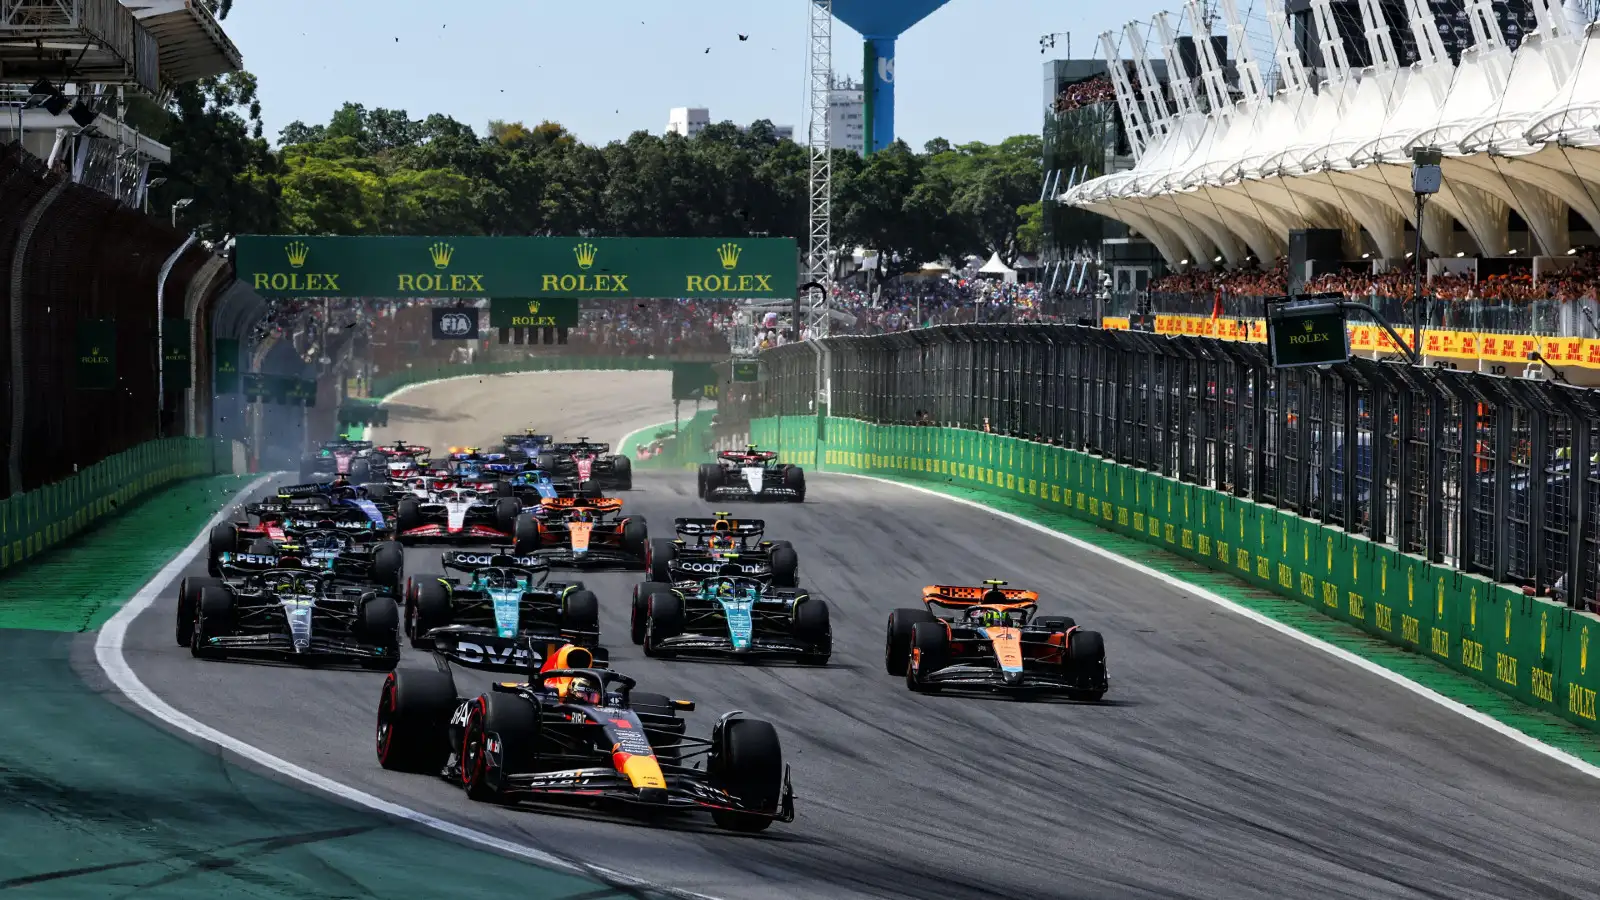 Max Verstappen dominated the Brazilian Grand Prix, having led from the start. FIA